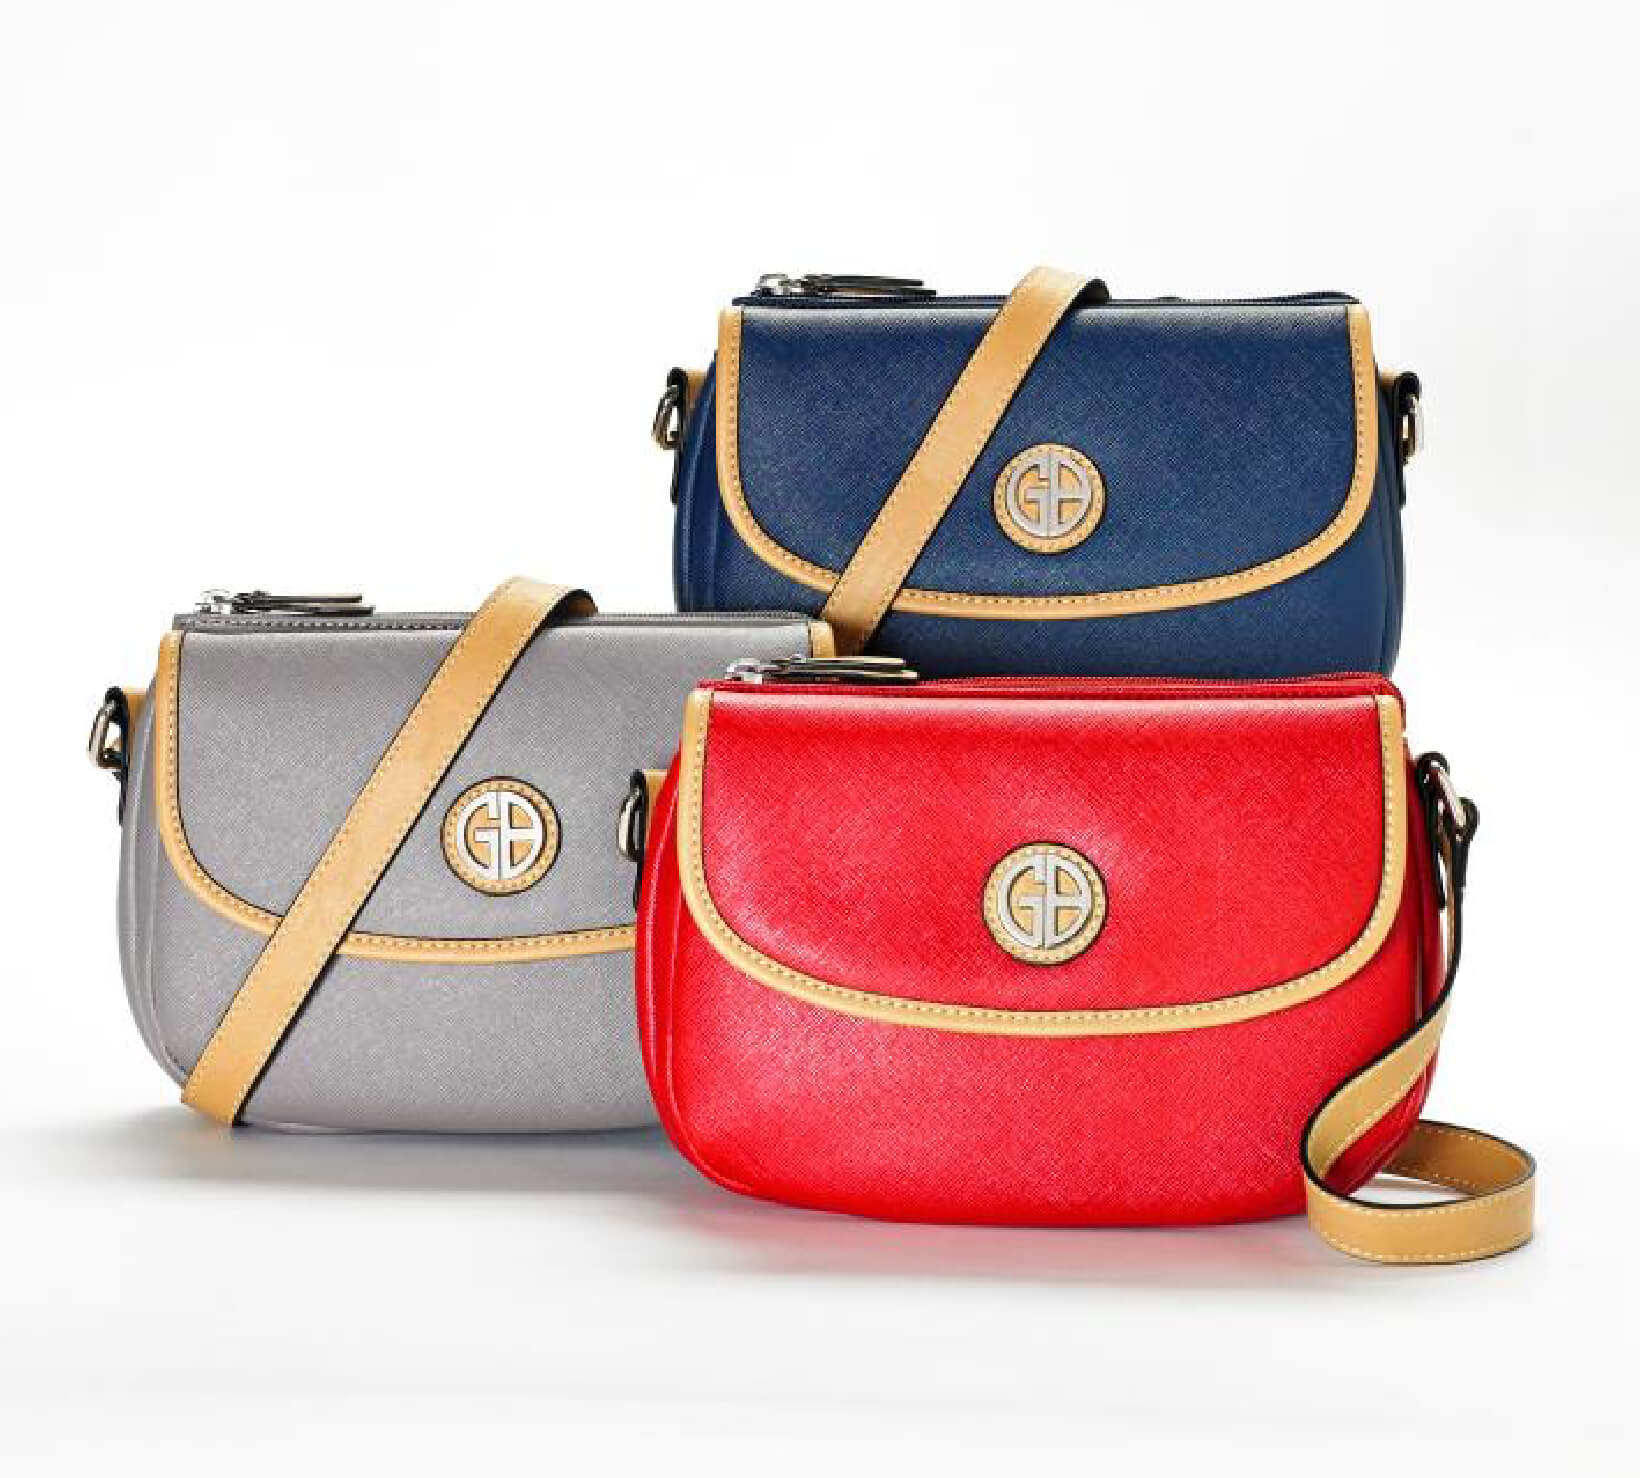 Giani Bernini Handbags | NYC Style Guide